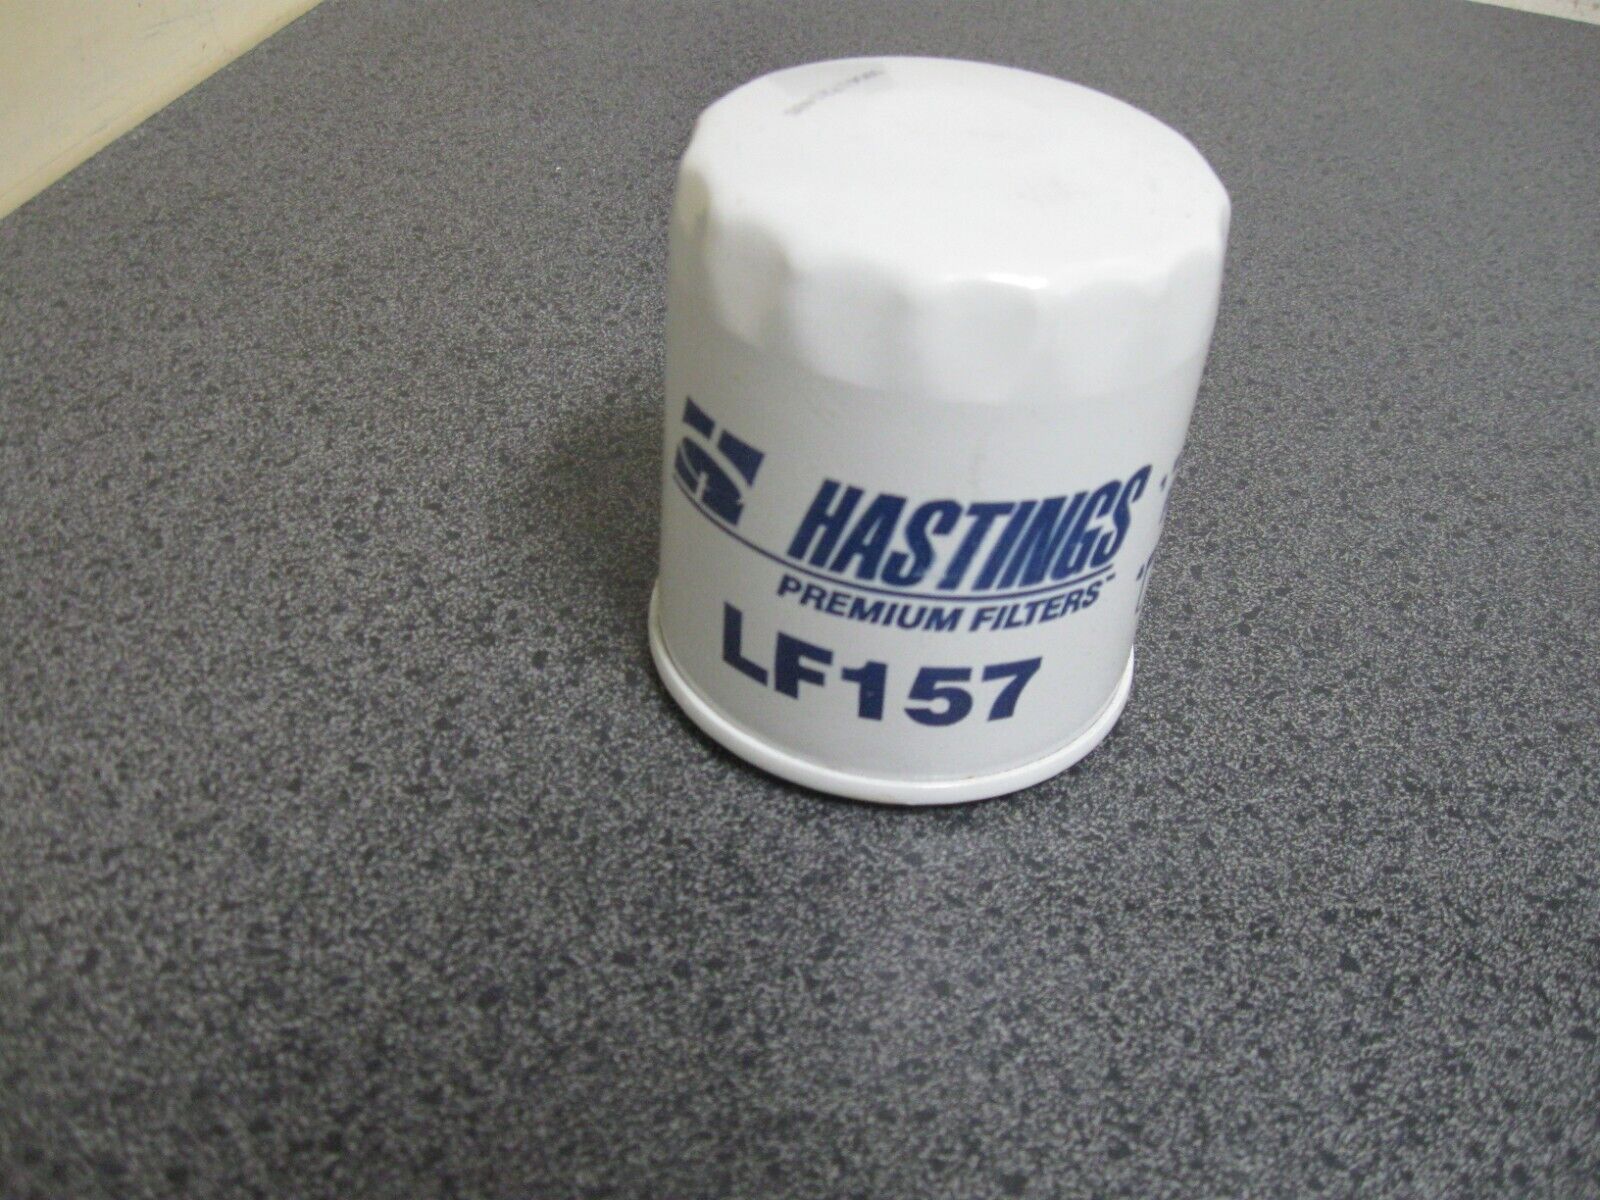 Hastings LF157 Transmission Oil Filter